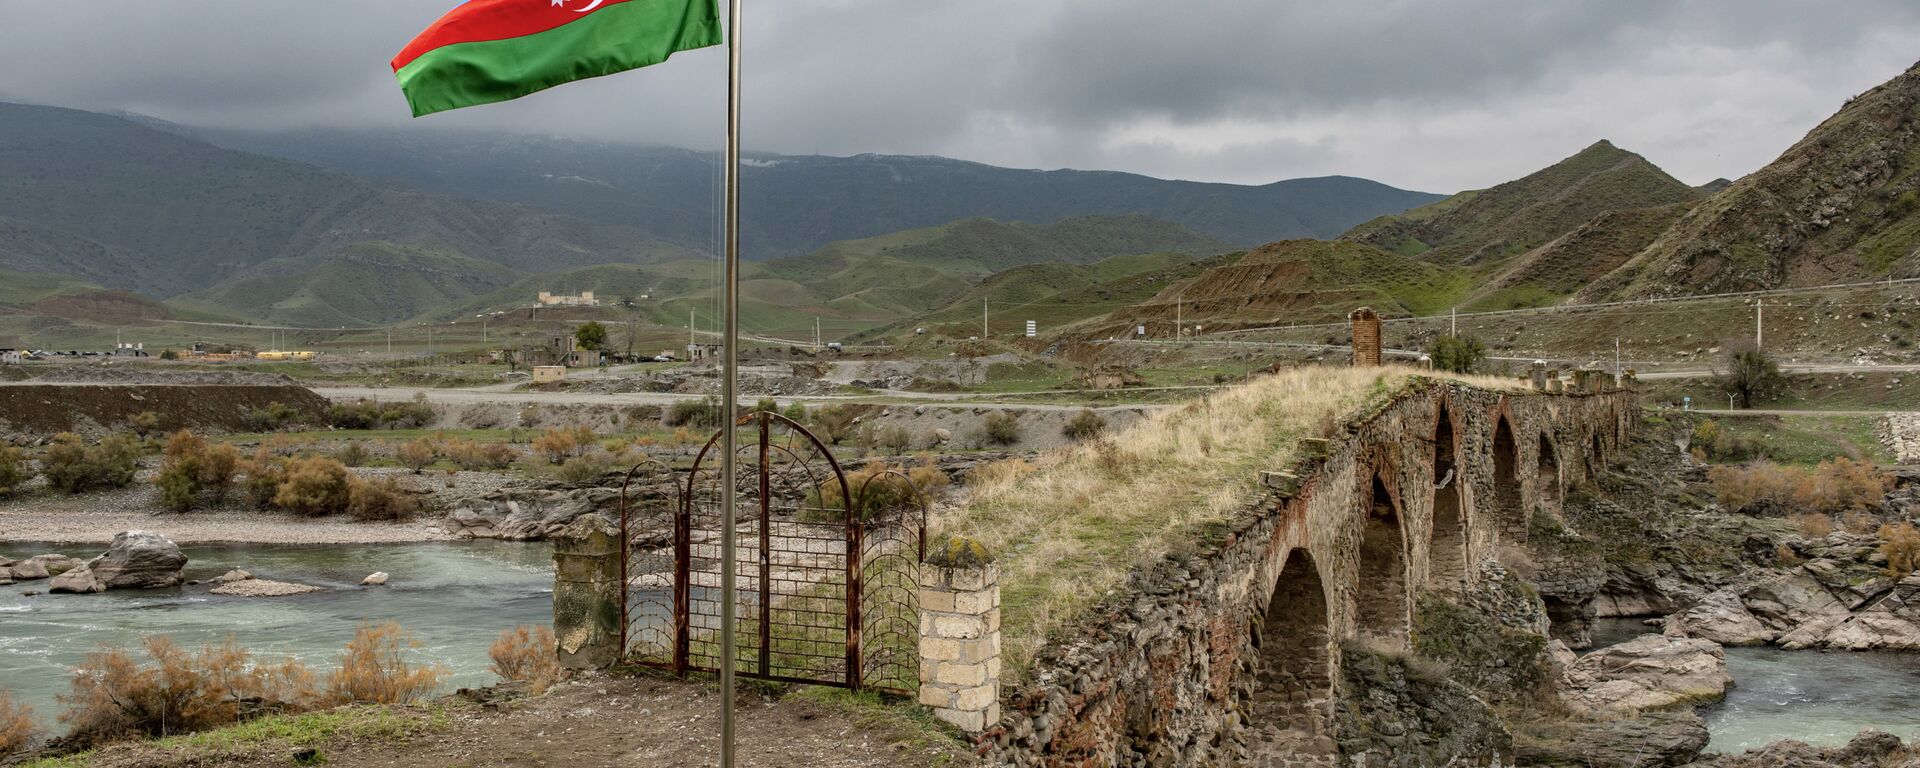 Флаг Азербайджана возле Худаферинского моста, фото из архива - Sputnik Азербайджан, 1920, 11.01.2021